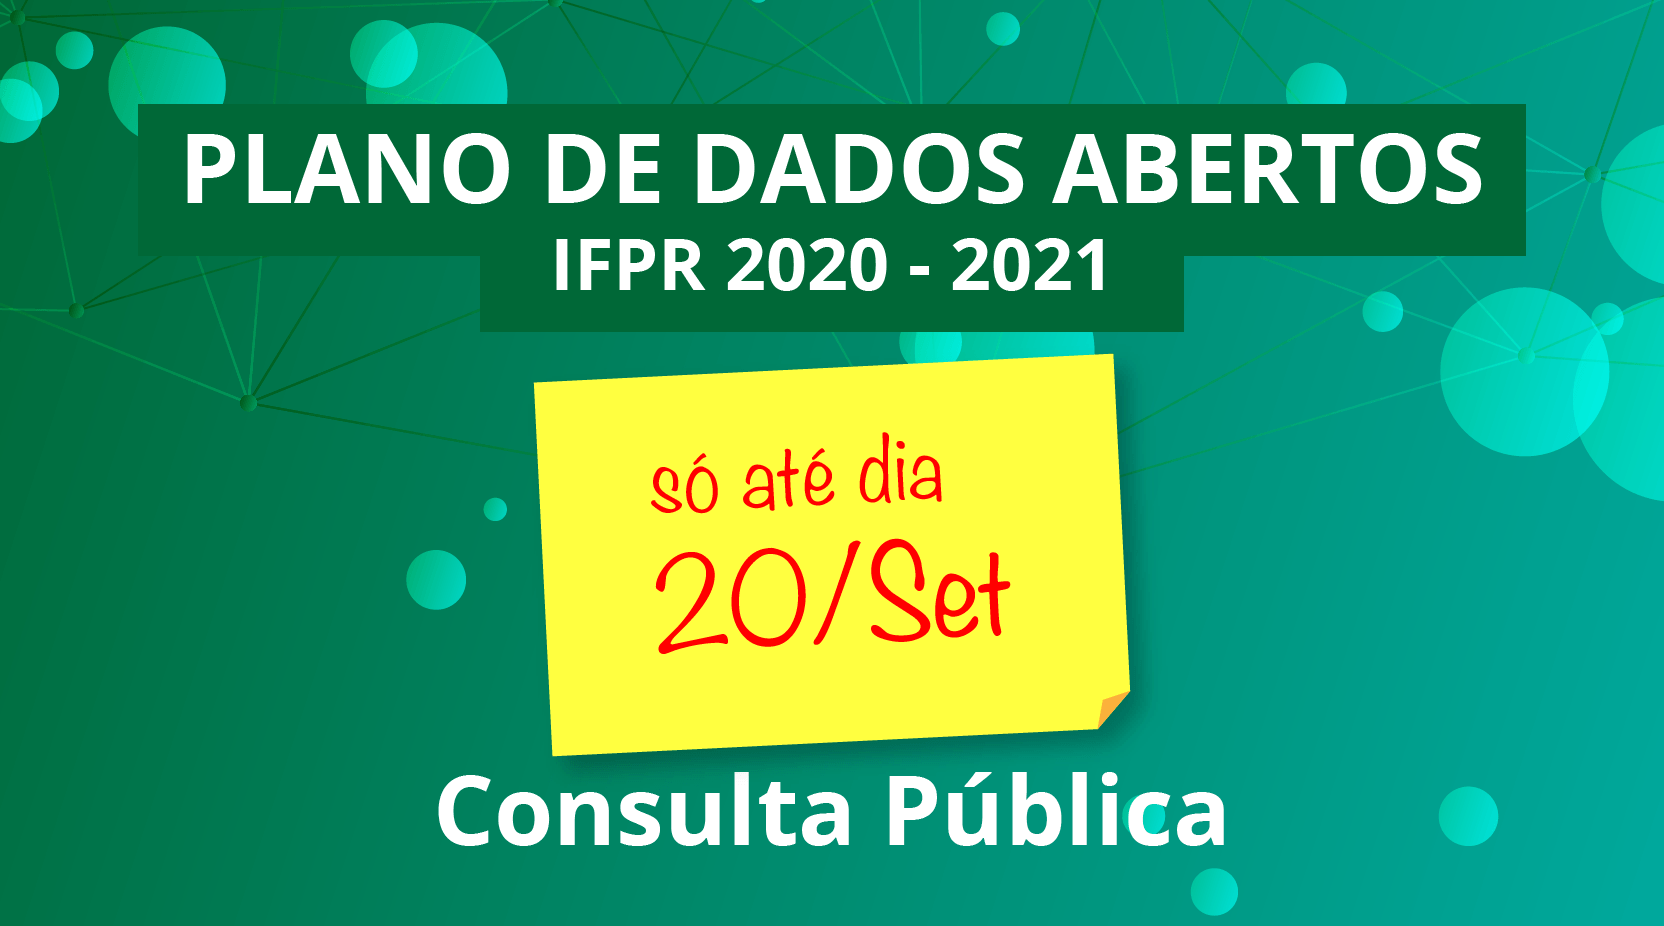 "Plano de Dados Abertos IFPR 2020-2021. Só até dia 20/set. Consulta Pública"